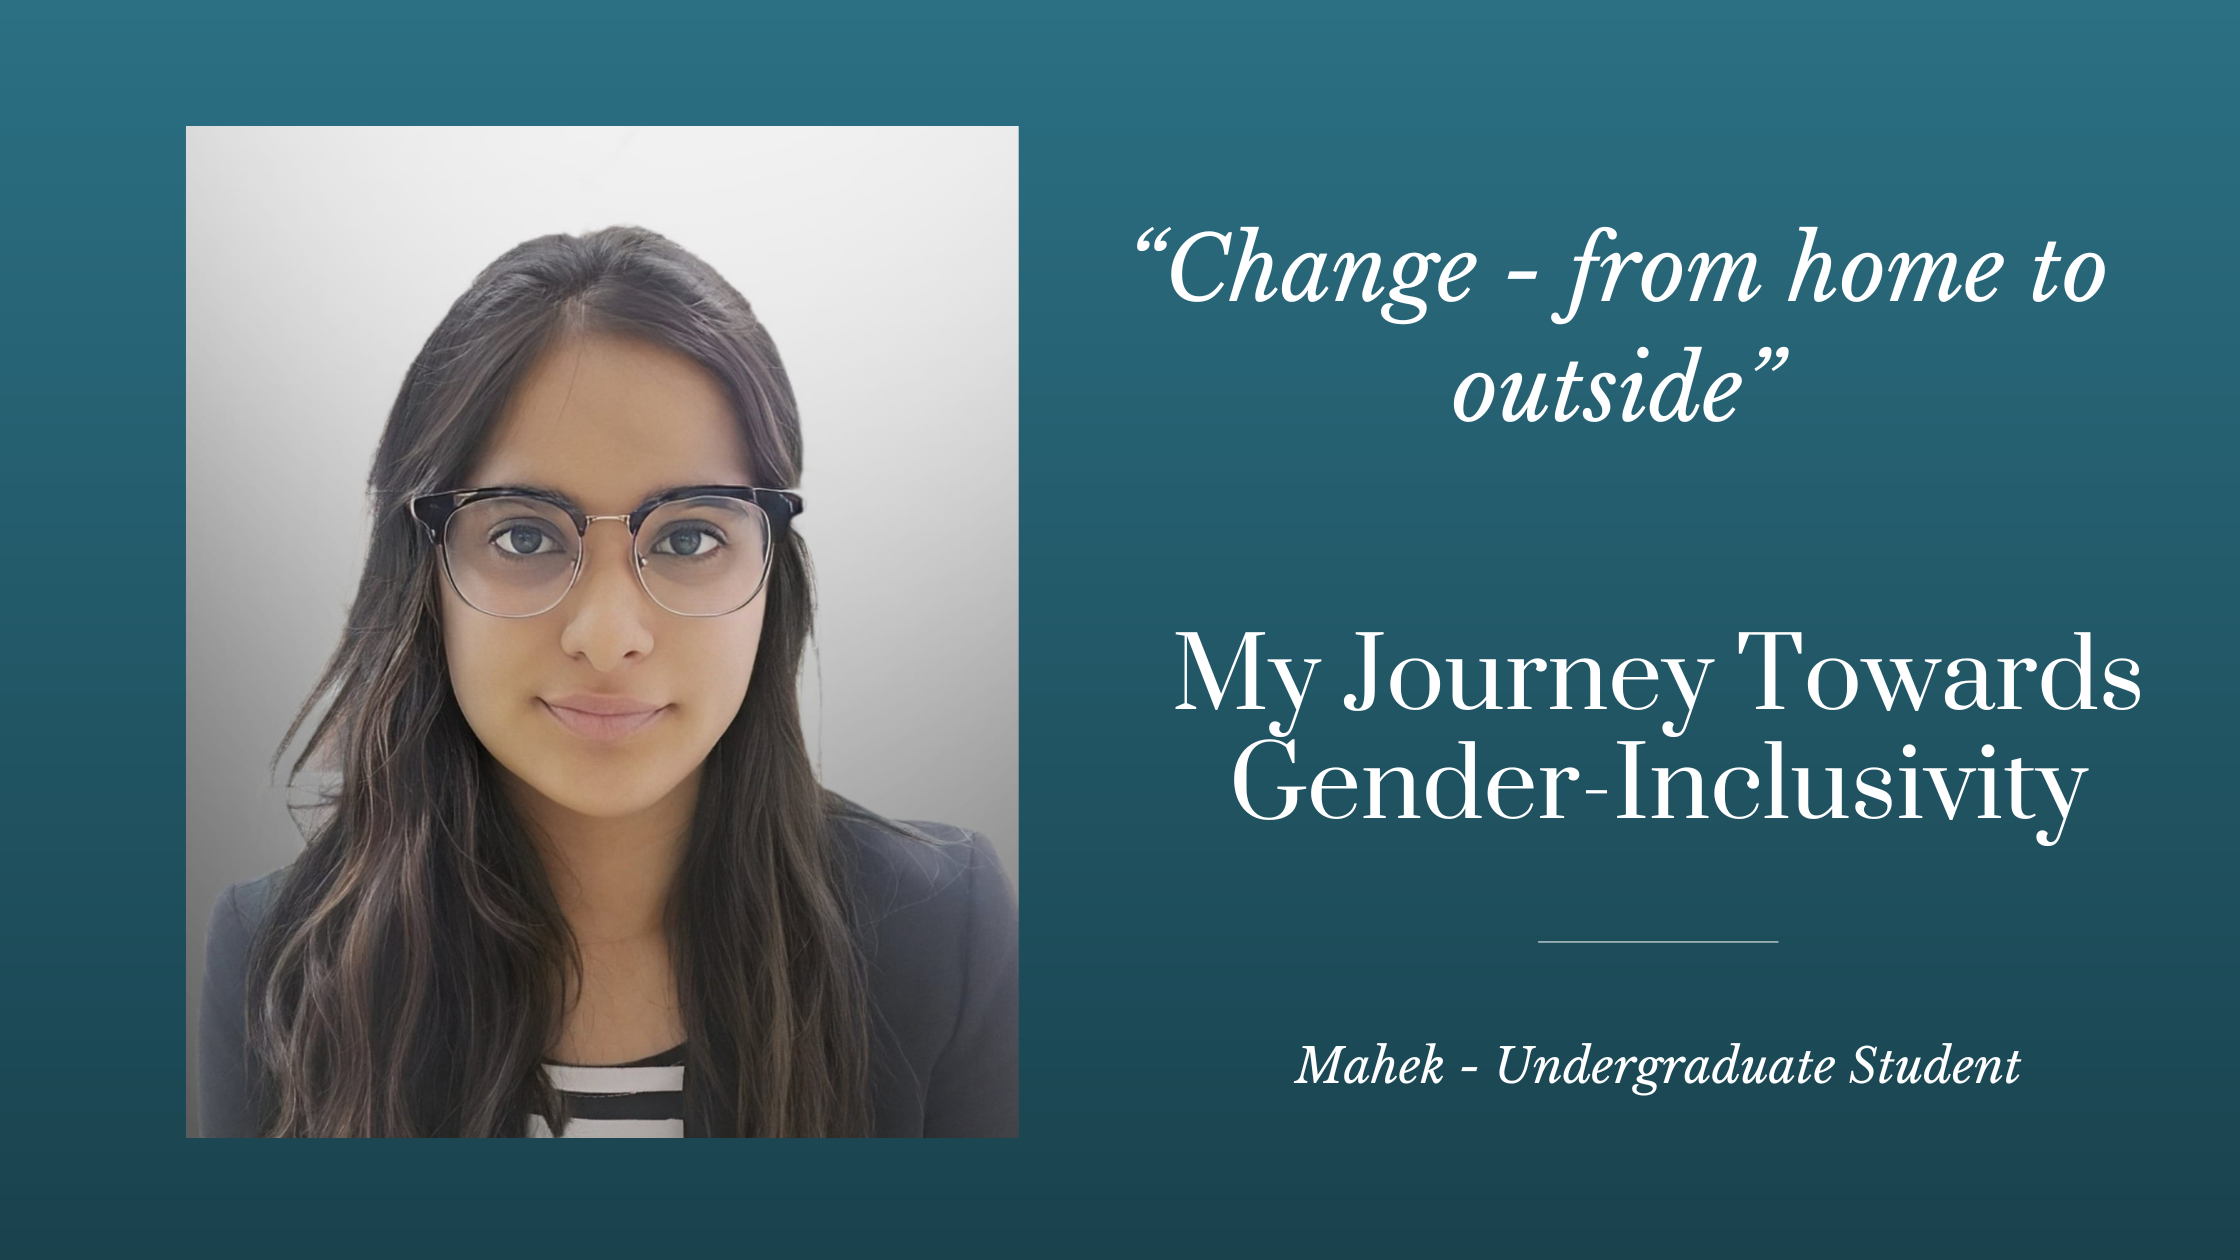 My Journey Towards Gender-Inclusivity